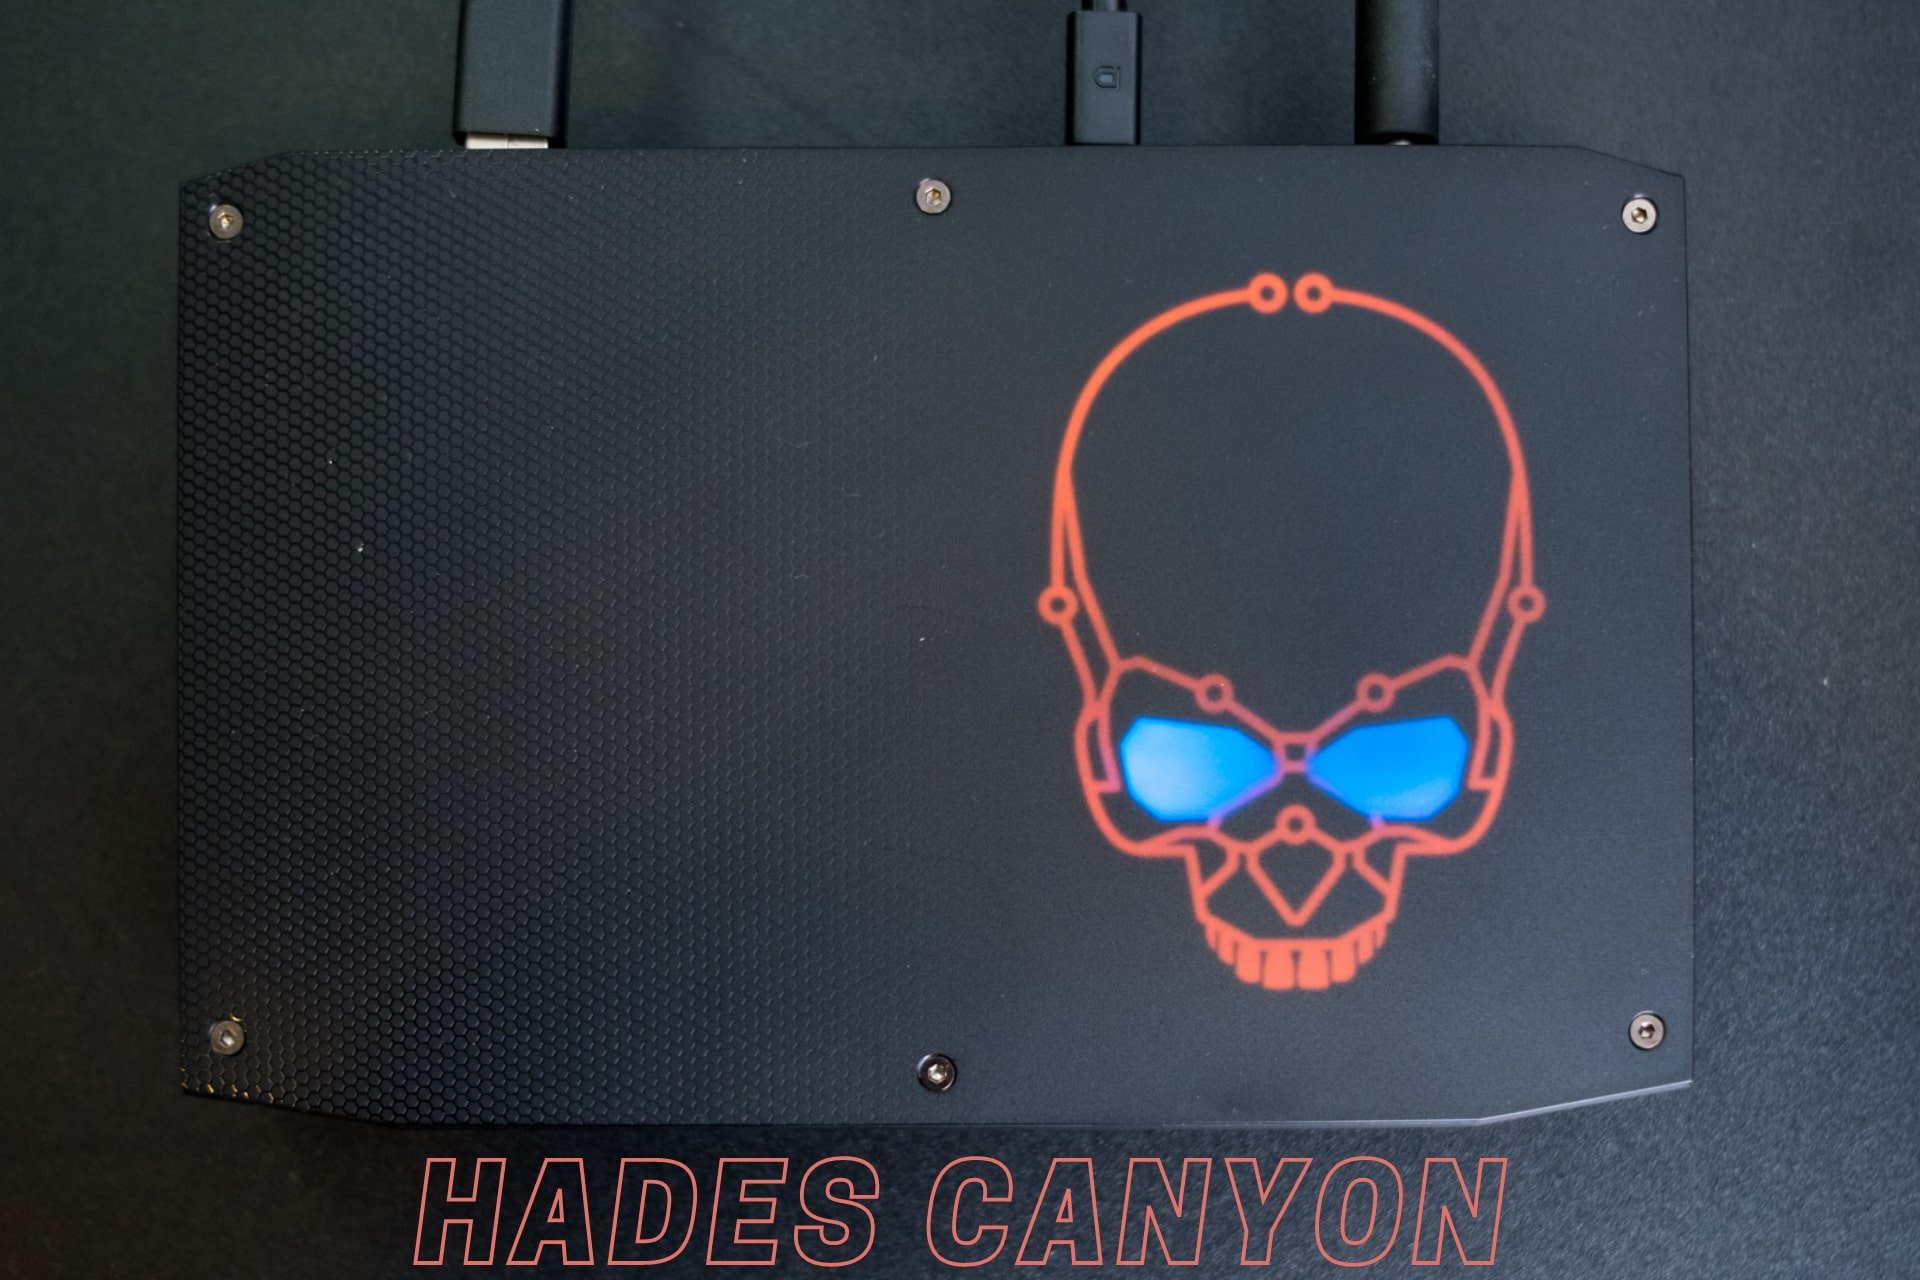 Windows 11 Hades Canyon support